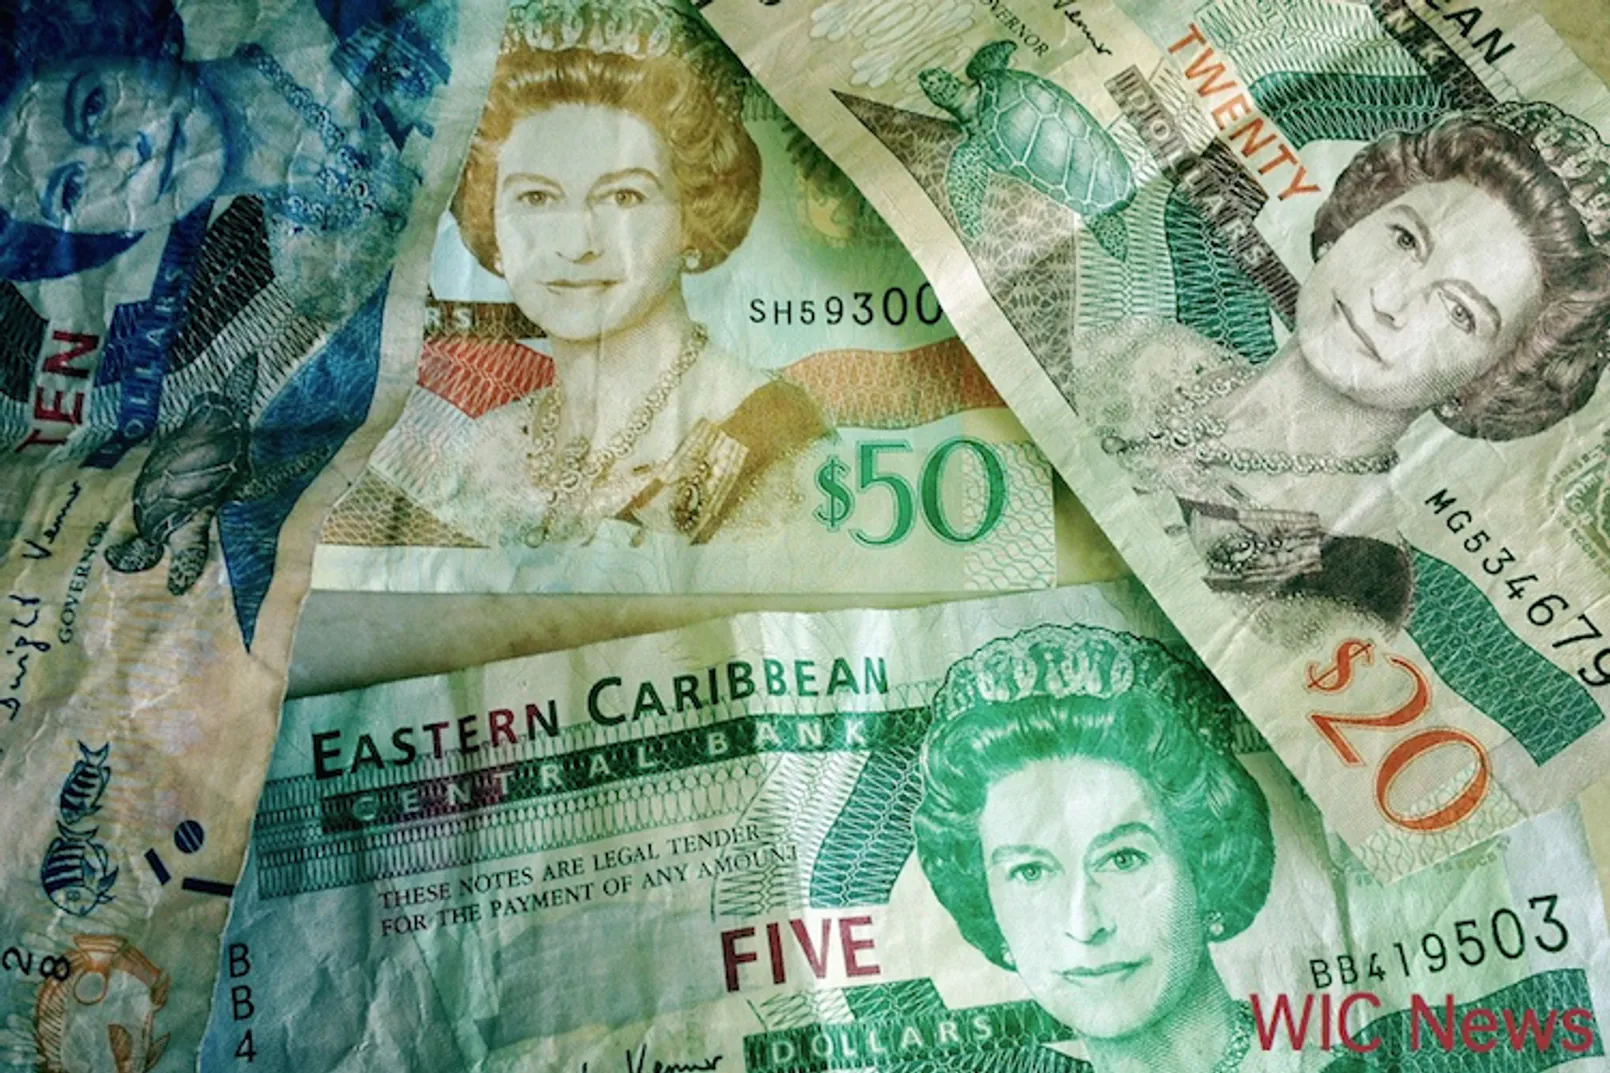 Ec Dollar Wic Eastern Caribbean Money Wic News.jpg